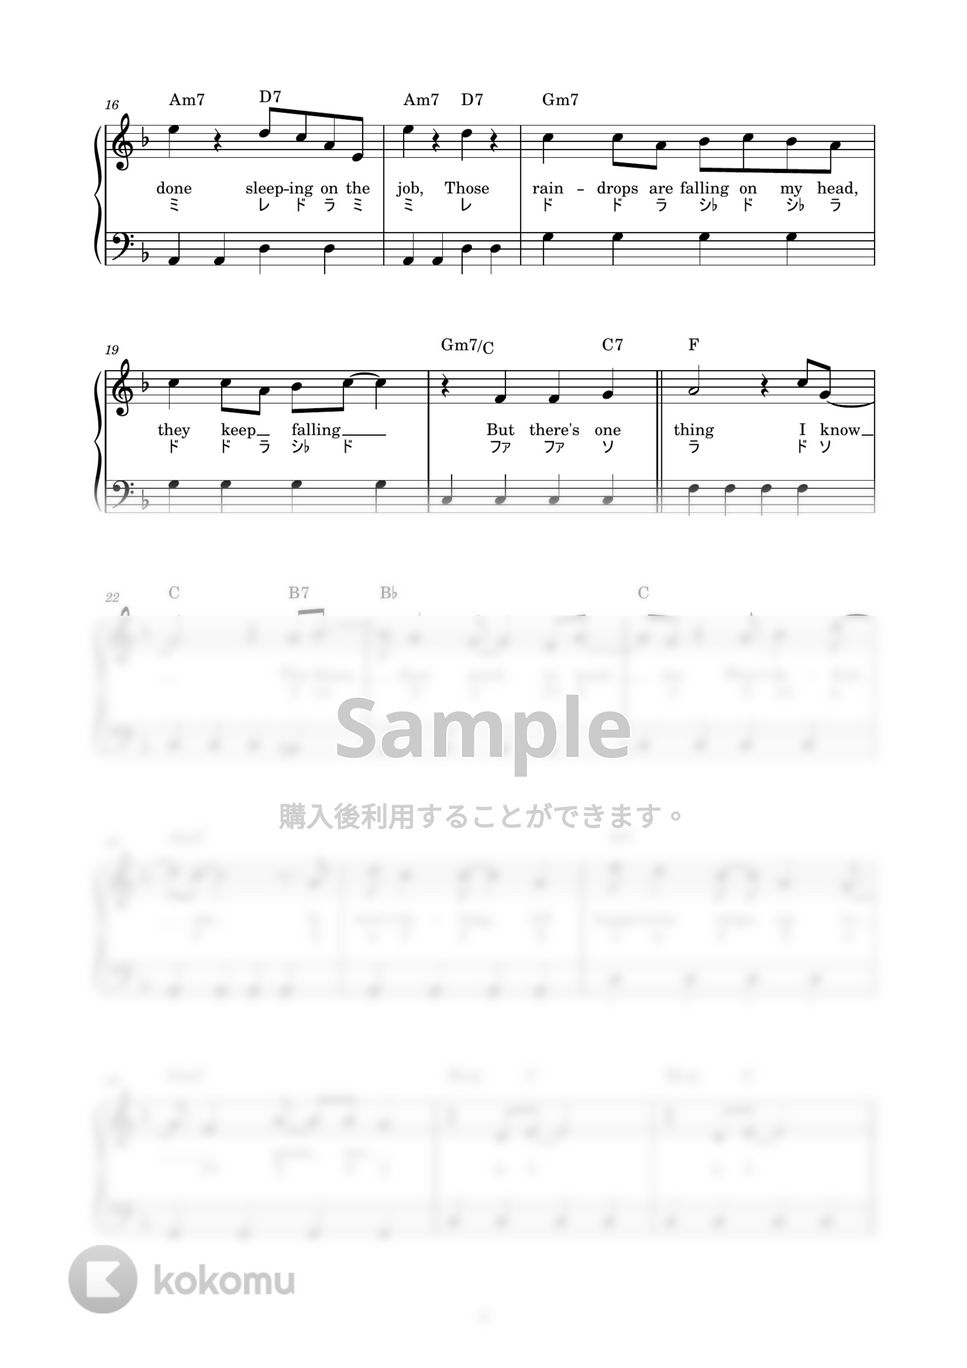 B. J. Thomas - 雨にぬれても (かんたん / 歌詞付き / ドレミ付き / 初心者) by piano.tokyo